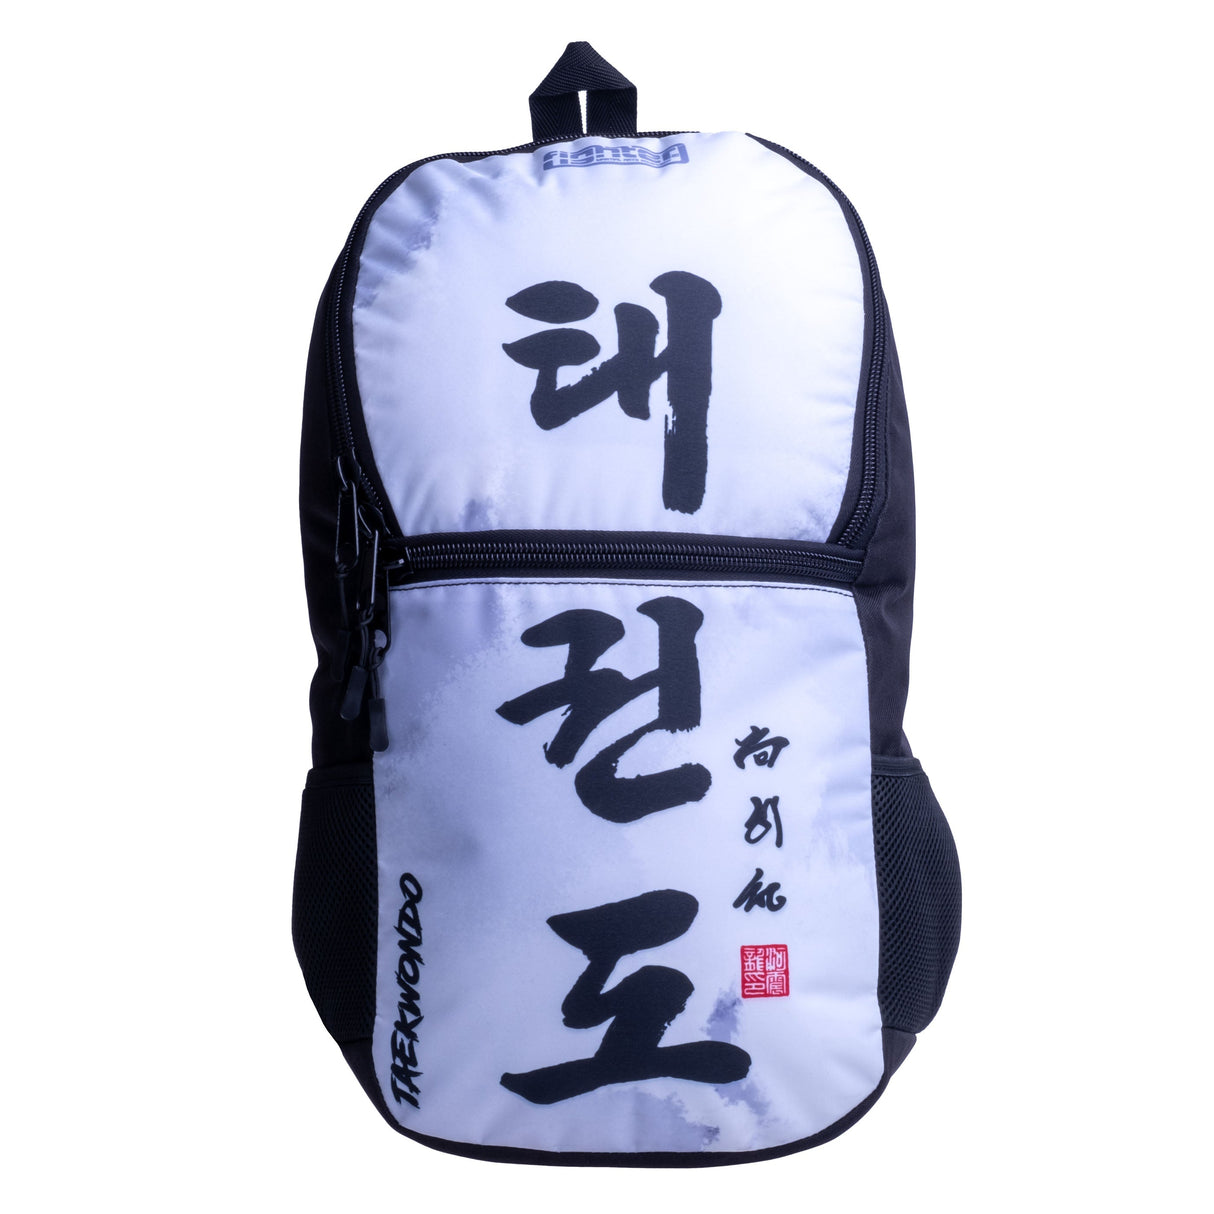 Fighter backpack Size S - Taekwon Do - white/gray, SBFS-TD-PL